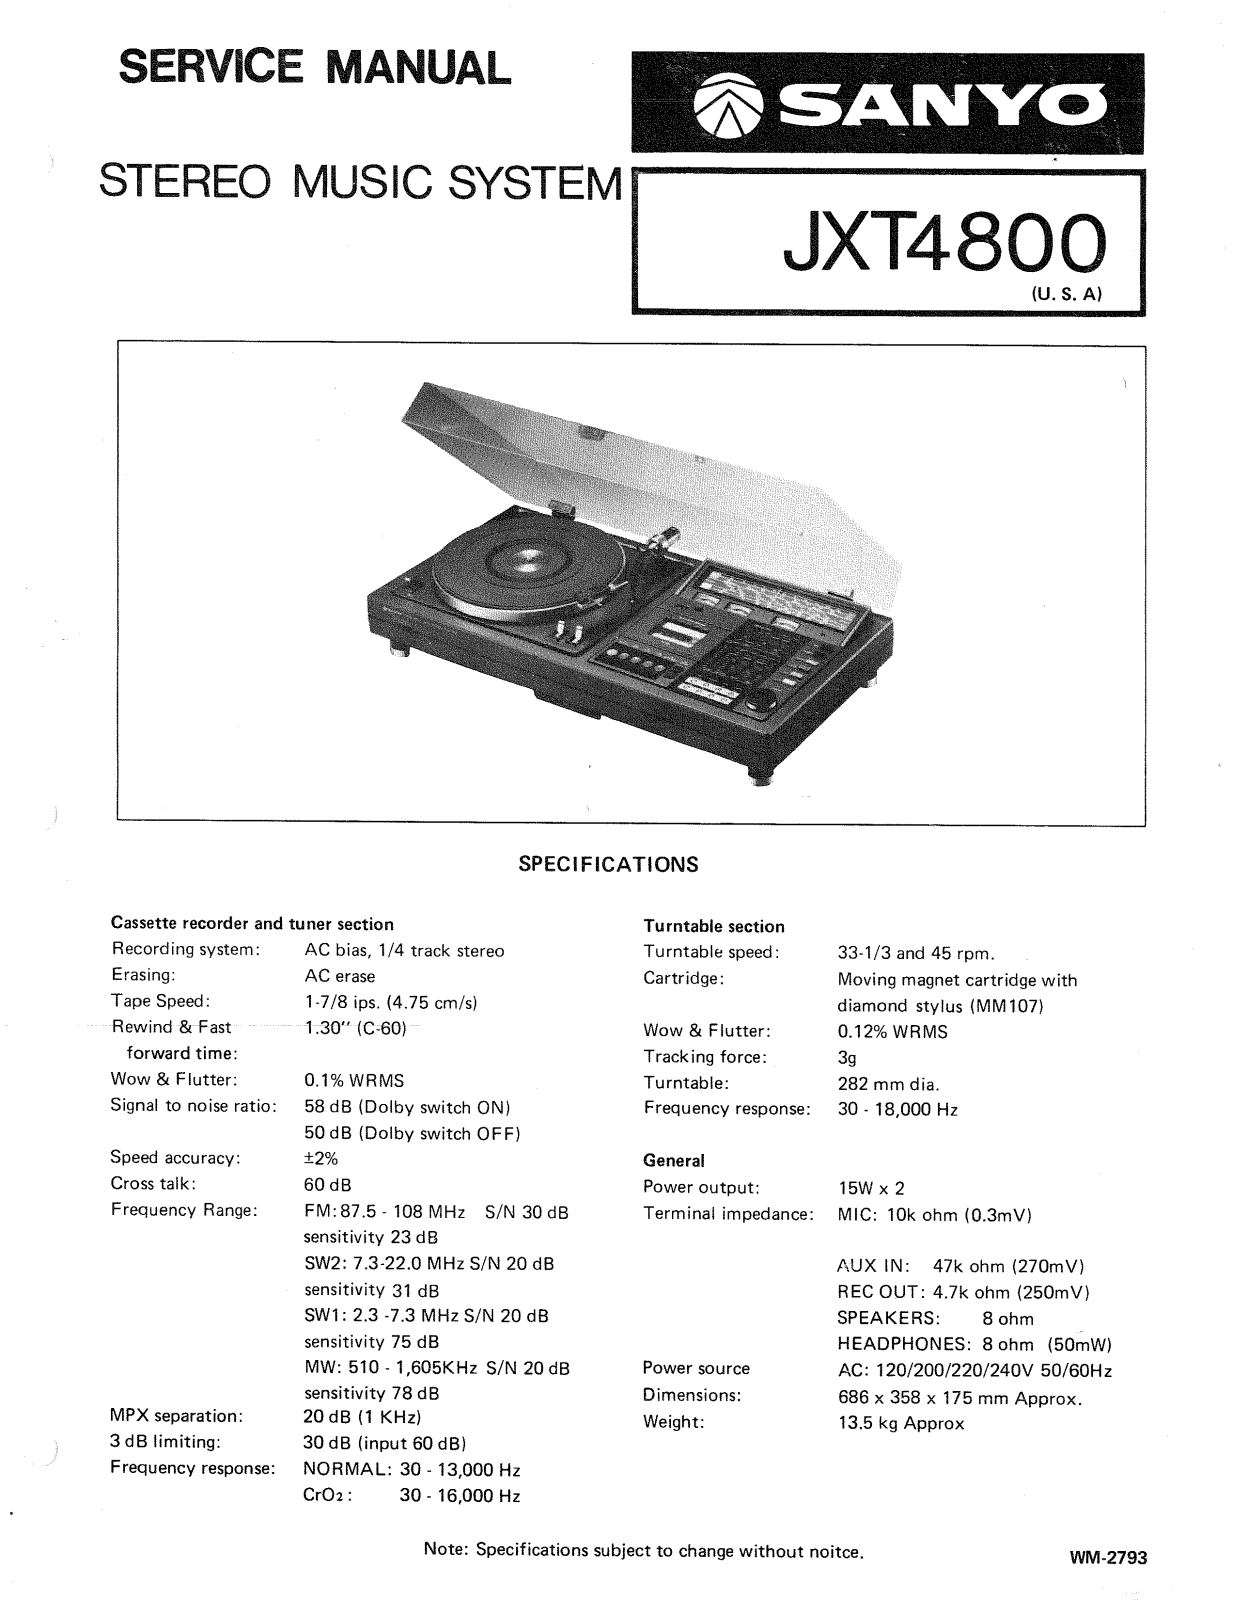 Sanyo JXT-4800 Service manual